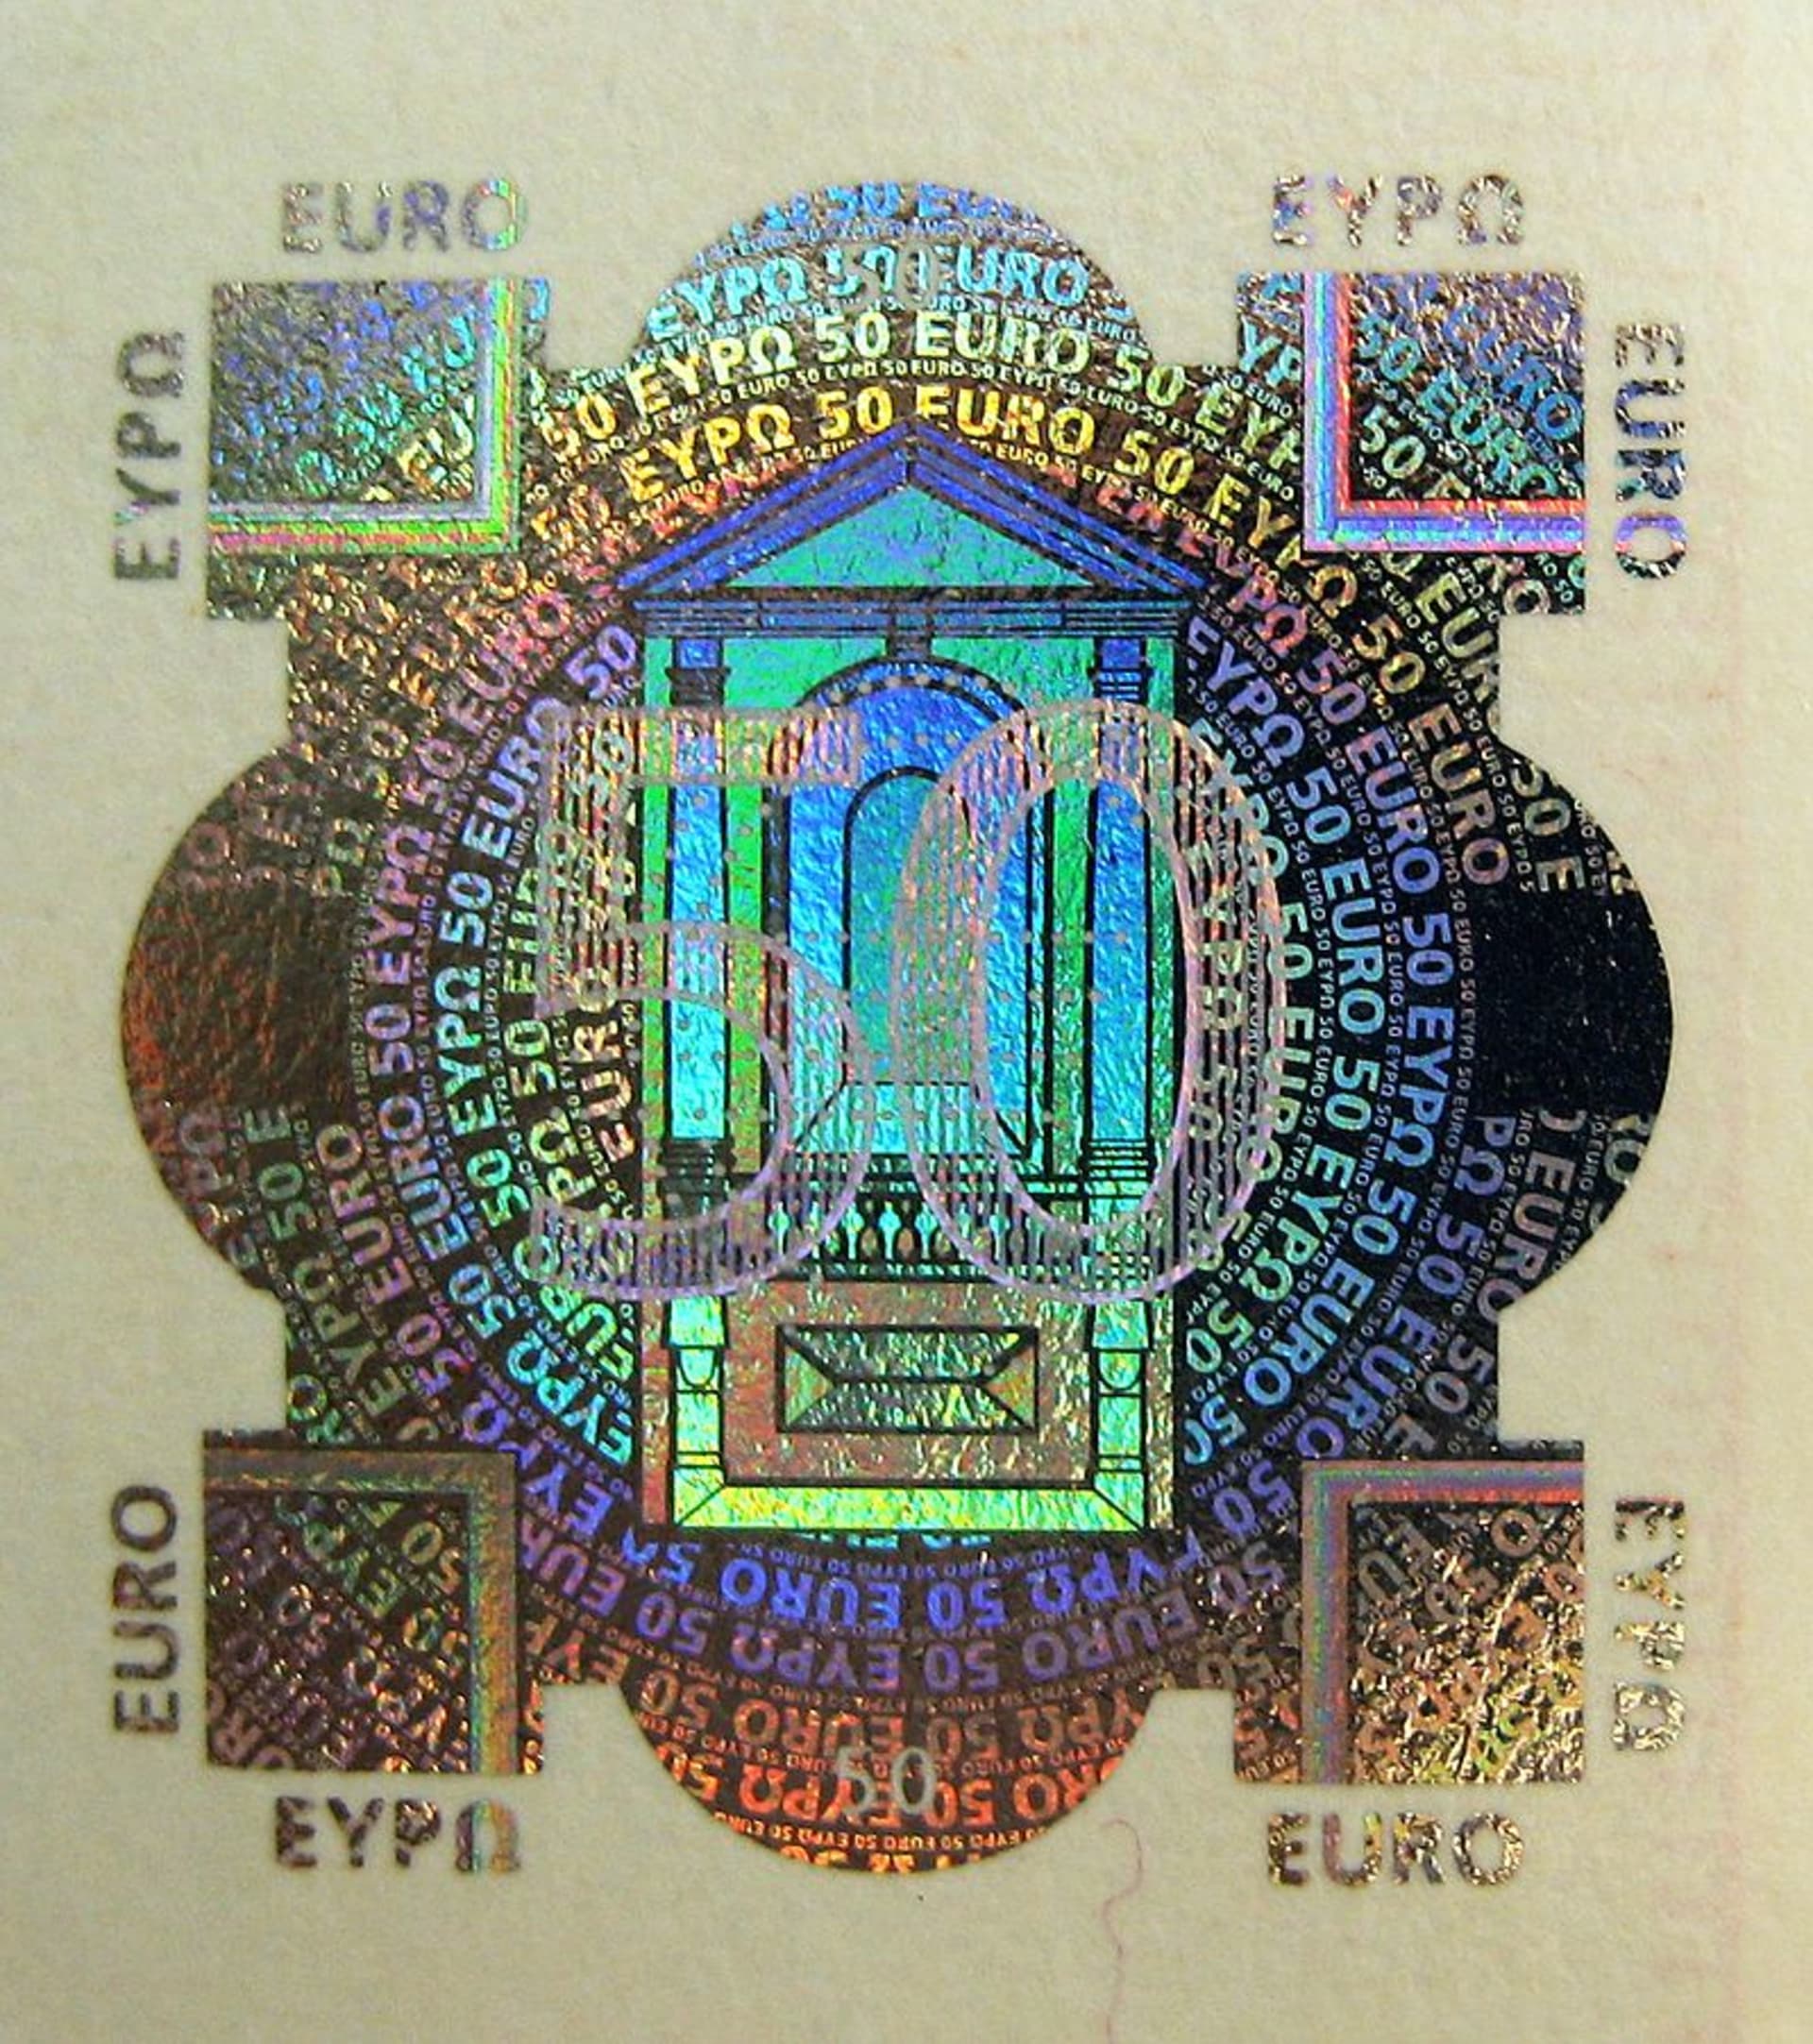 Hologram - 50 Euro